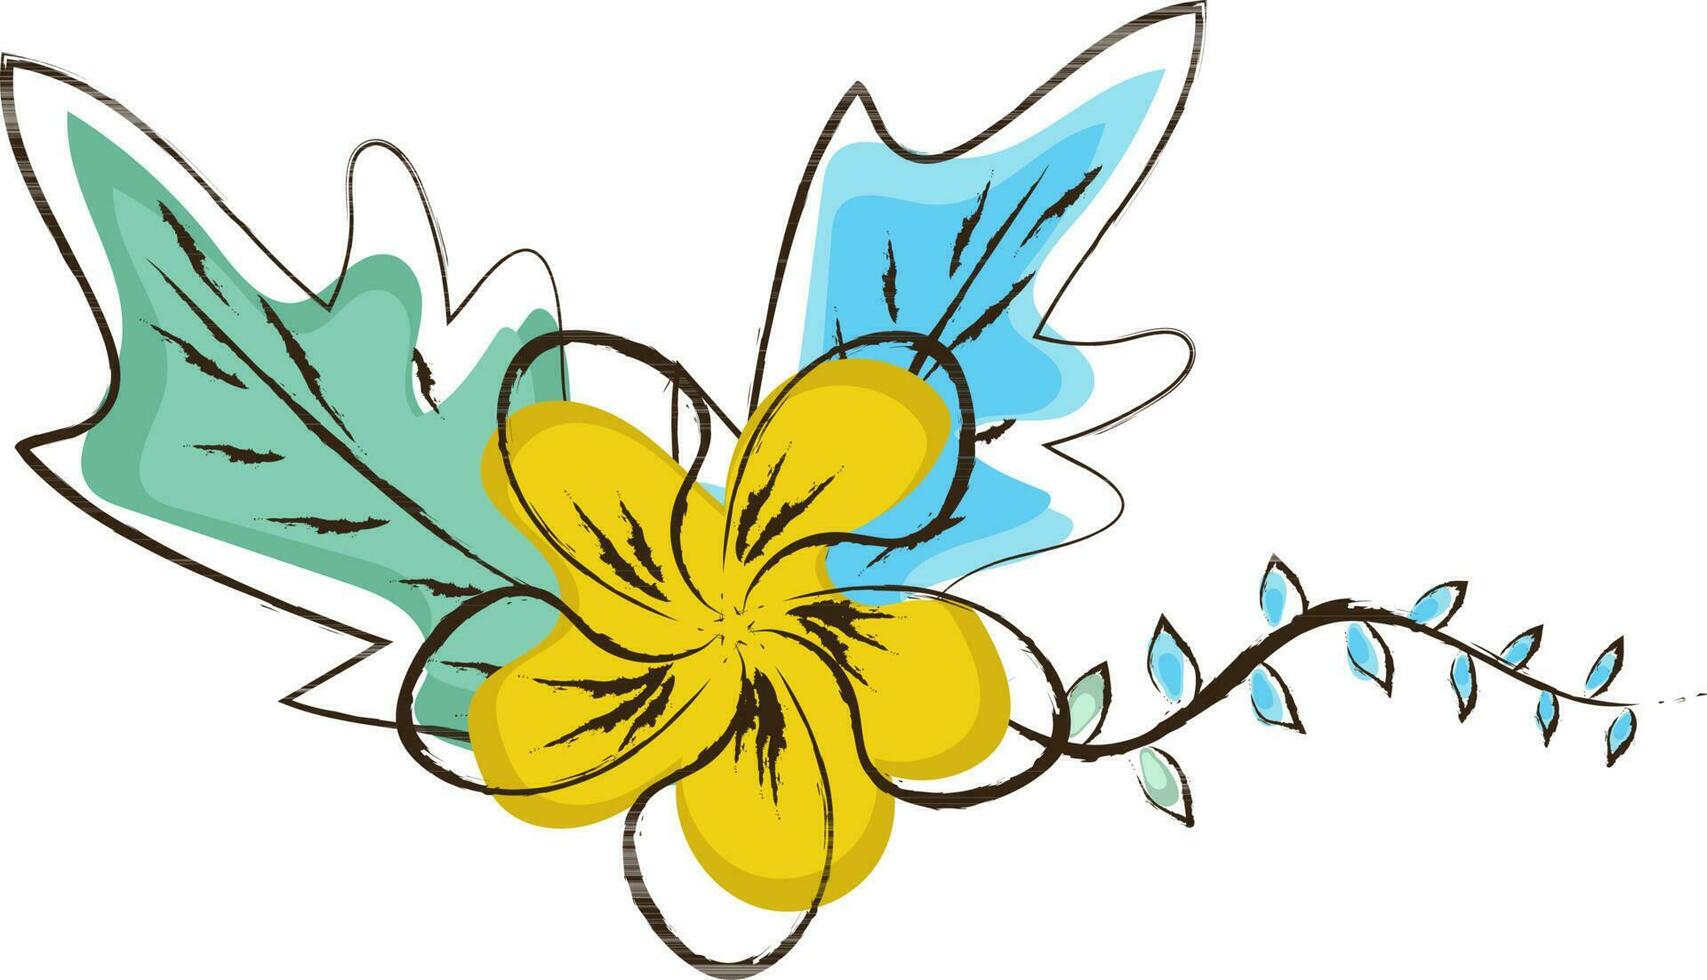 Hand drawn illustration of flower. vector